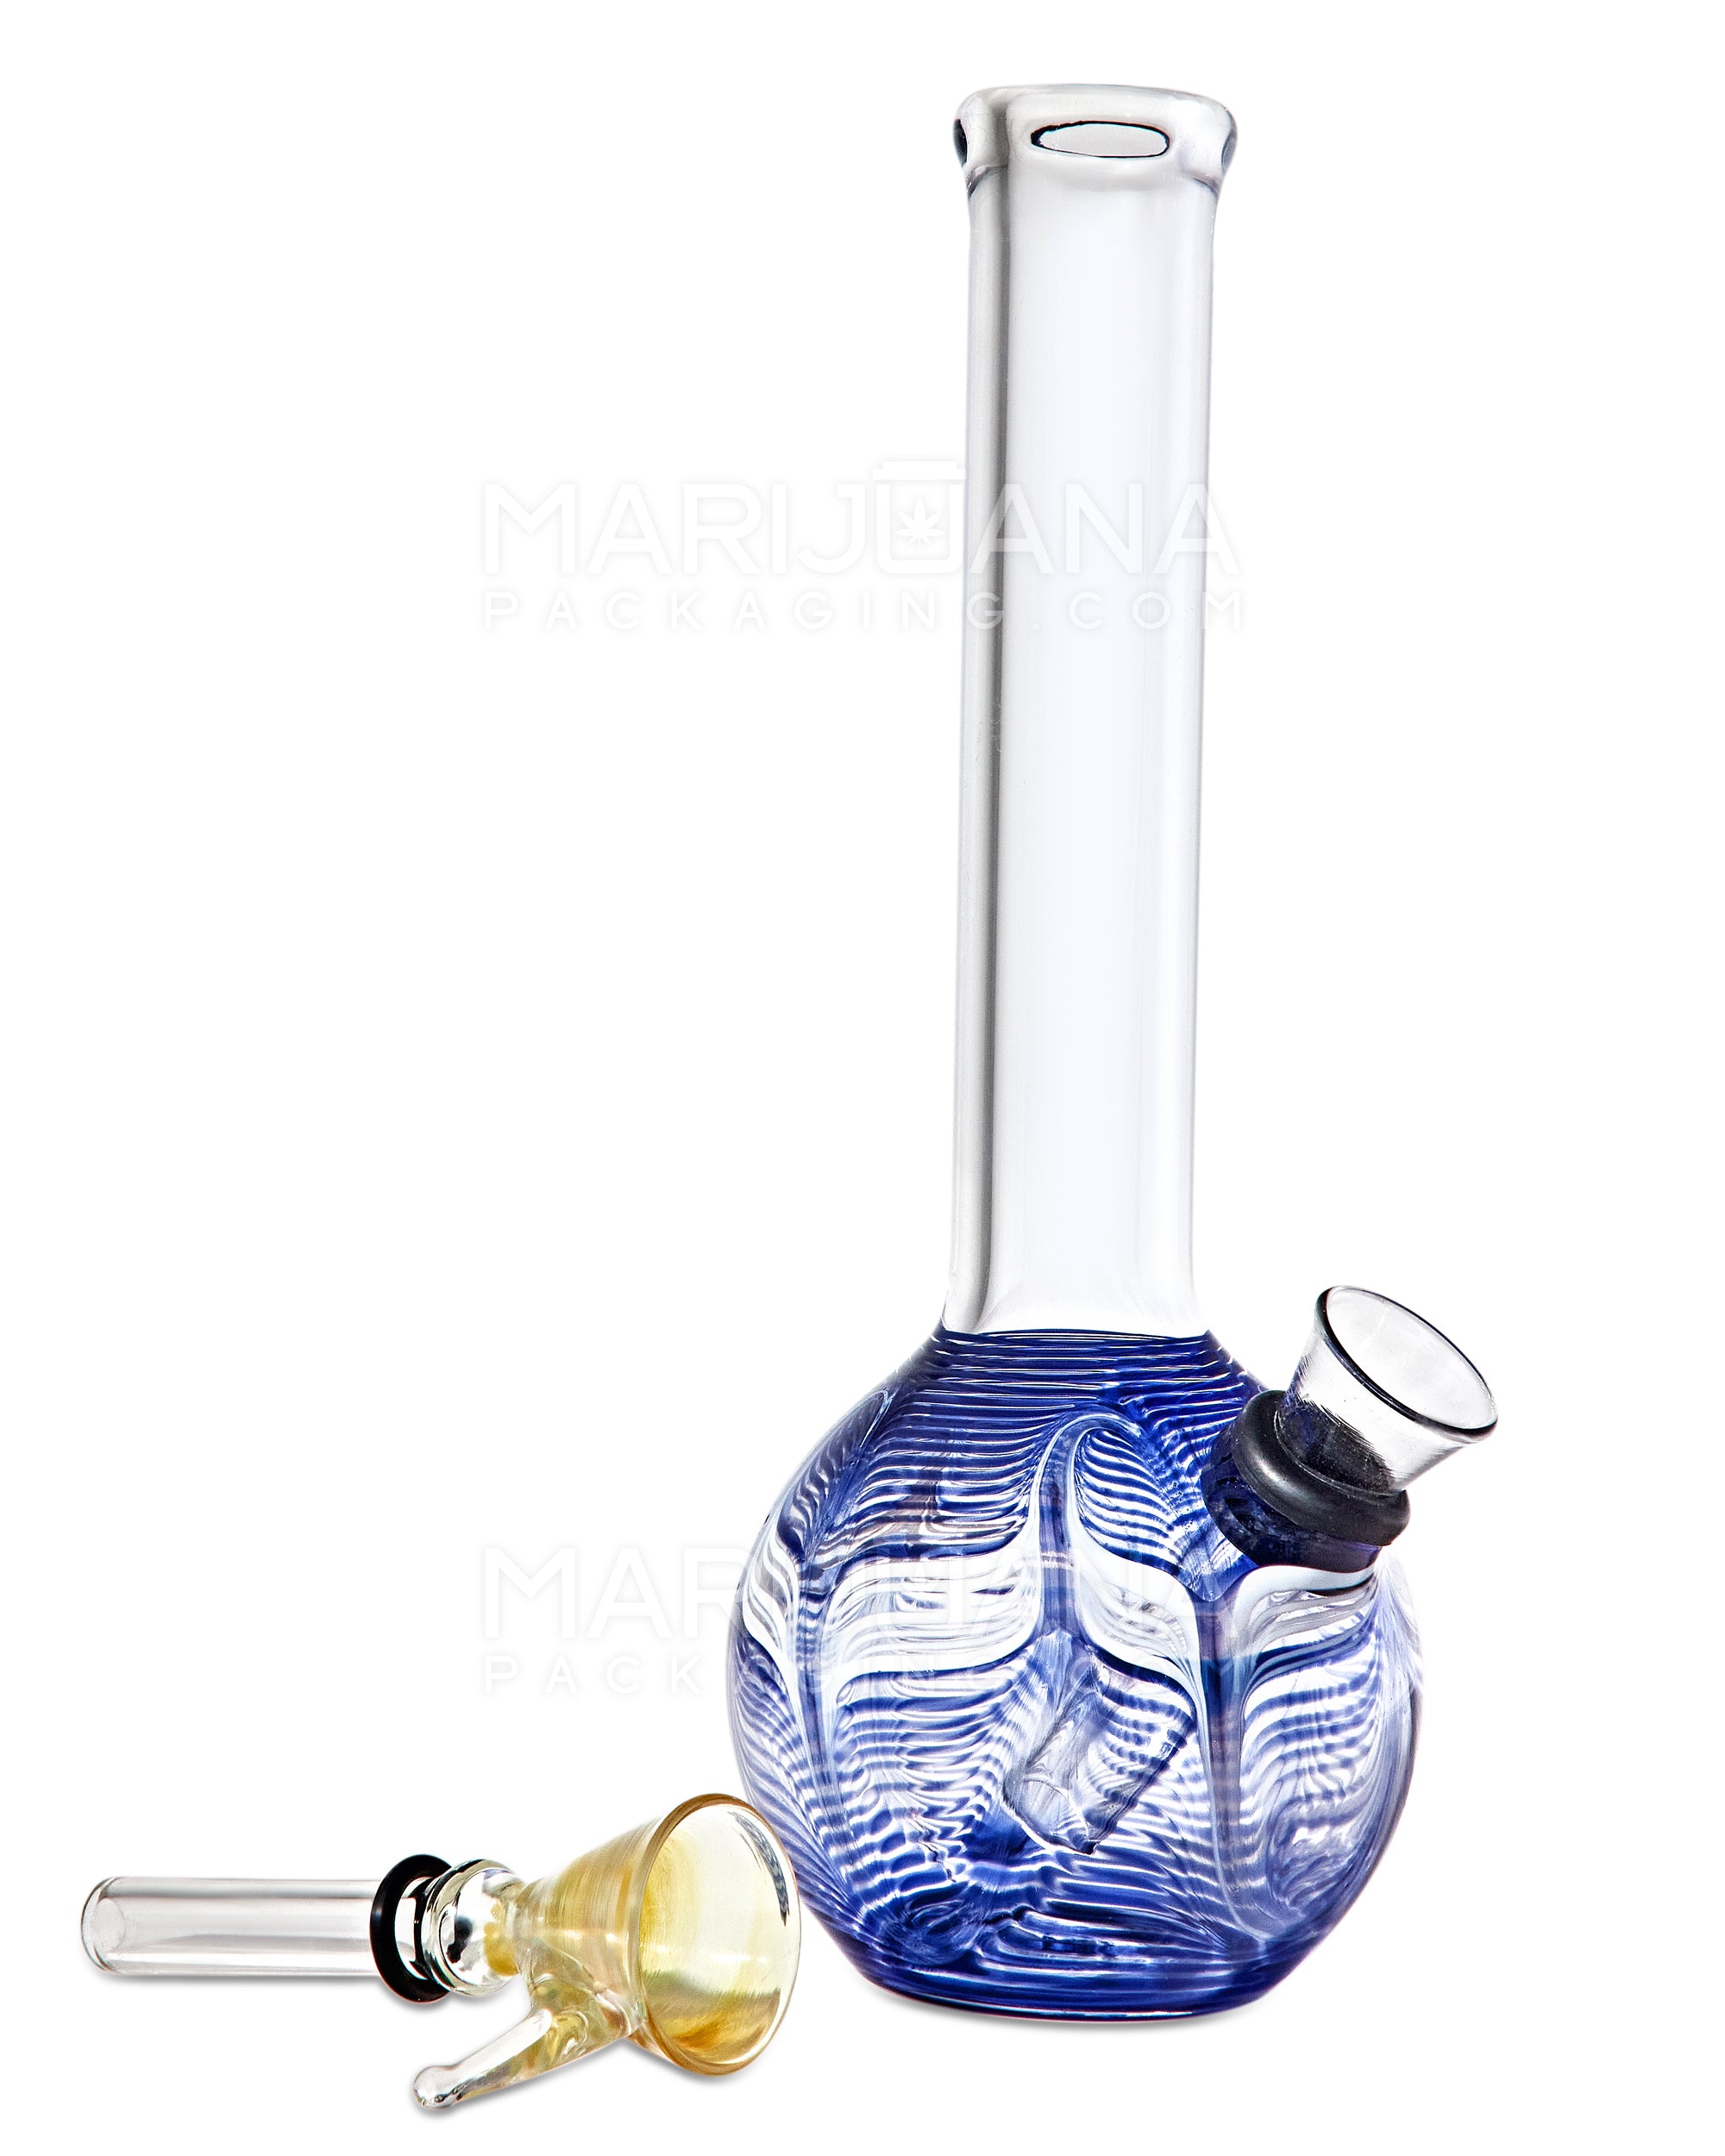 35cm X 7mm High Borosilicate Glass Smoking Water Pipe Smoking Pipe